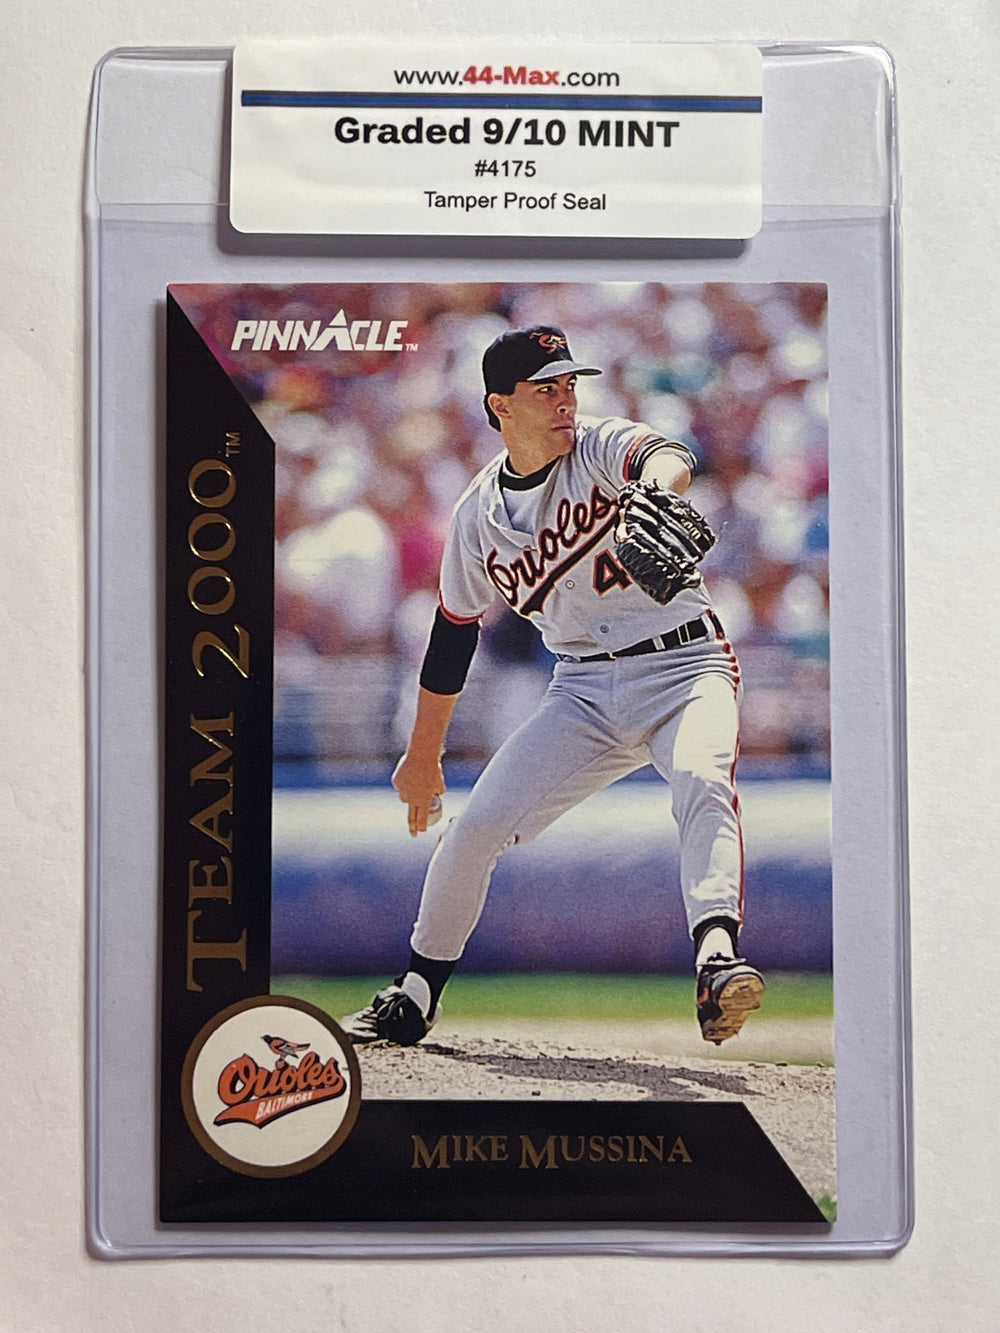 Mike Mussina Team 2000 1992 Pinnacle Baseball Card. 44-Max 9/10 Mint #4175